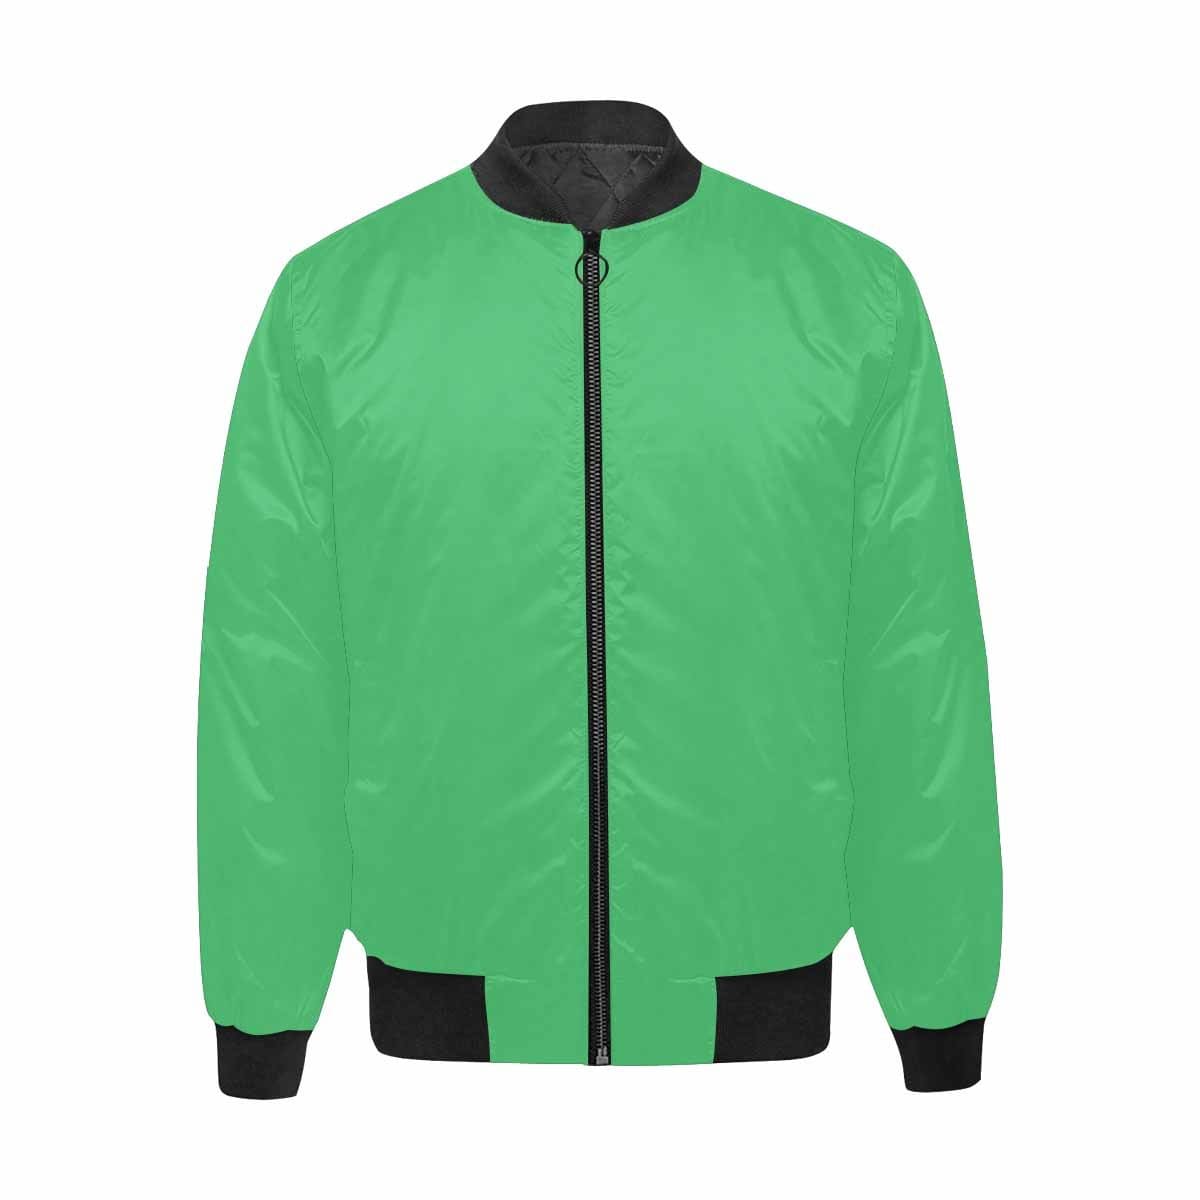 Mens Jacket Emerald Green And Black Bomber Jacket - Mens | Jackets | Bombers